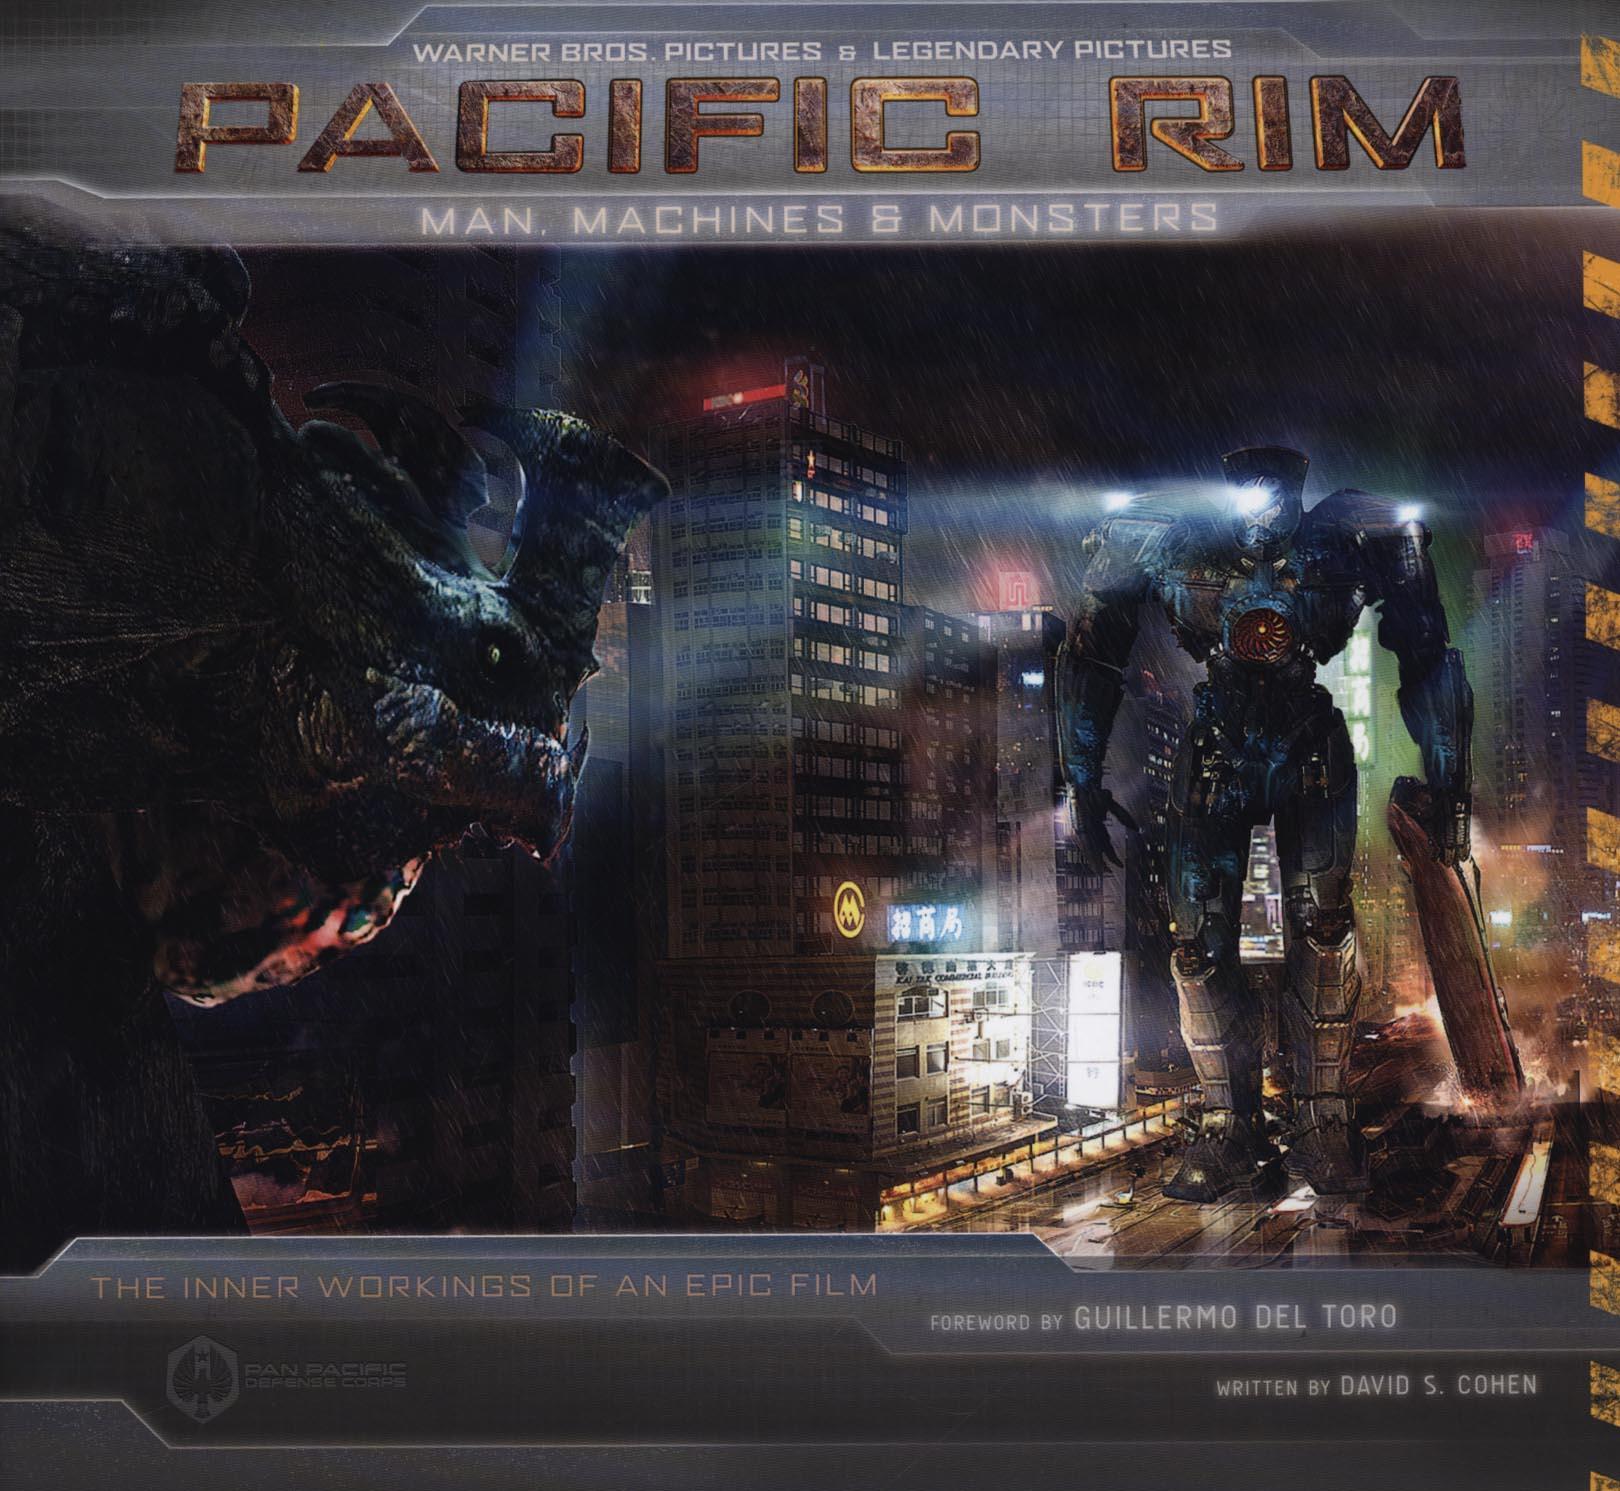 Pacific Rim: Man, Machines & Monsters